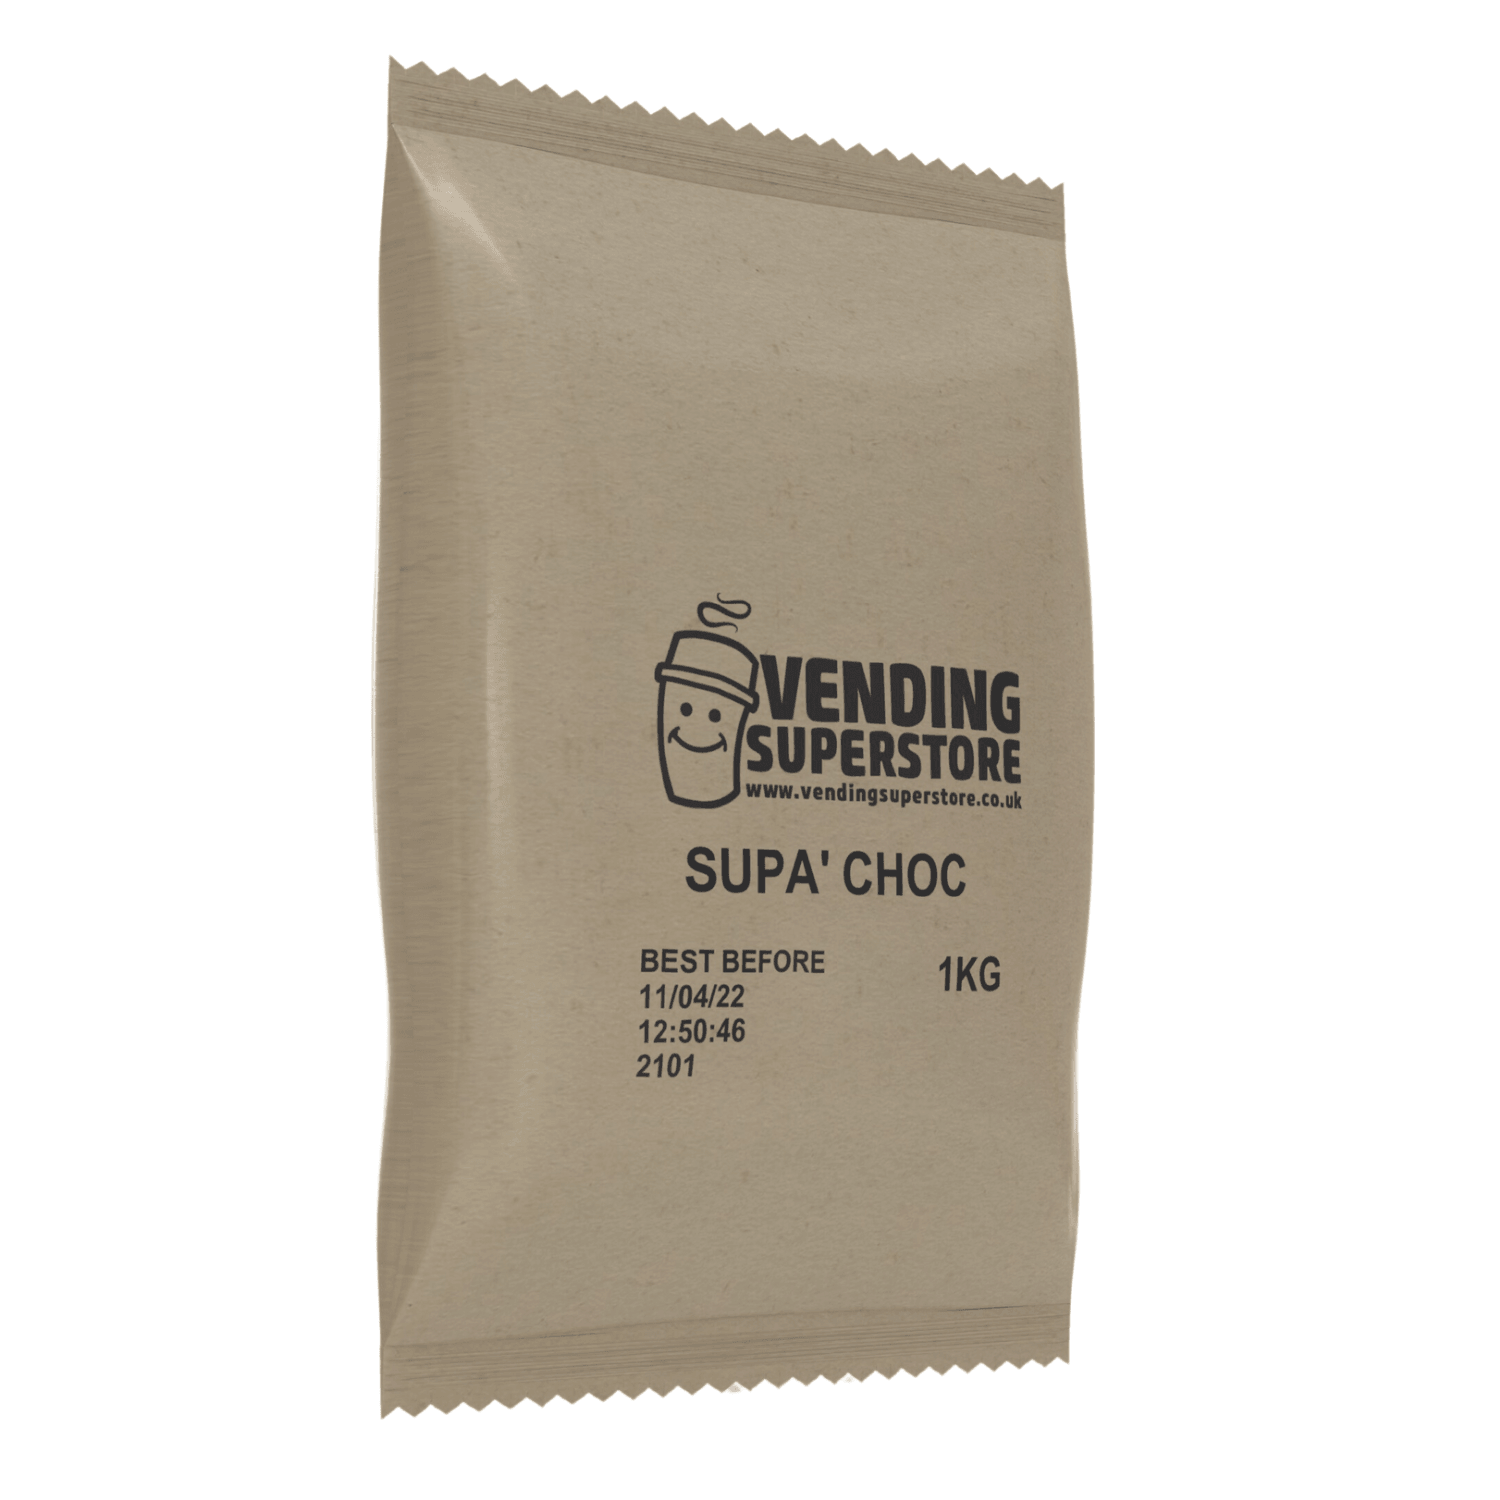 Vending Superstore - Premium Supa Choc, Vending Machine Hot Chocolate - Single 1KG Bag - Vending Superstore